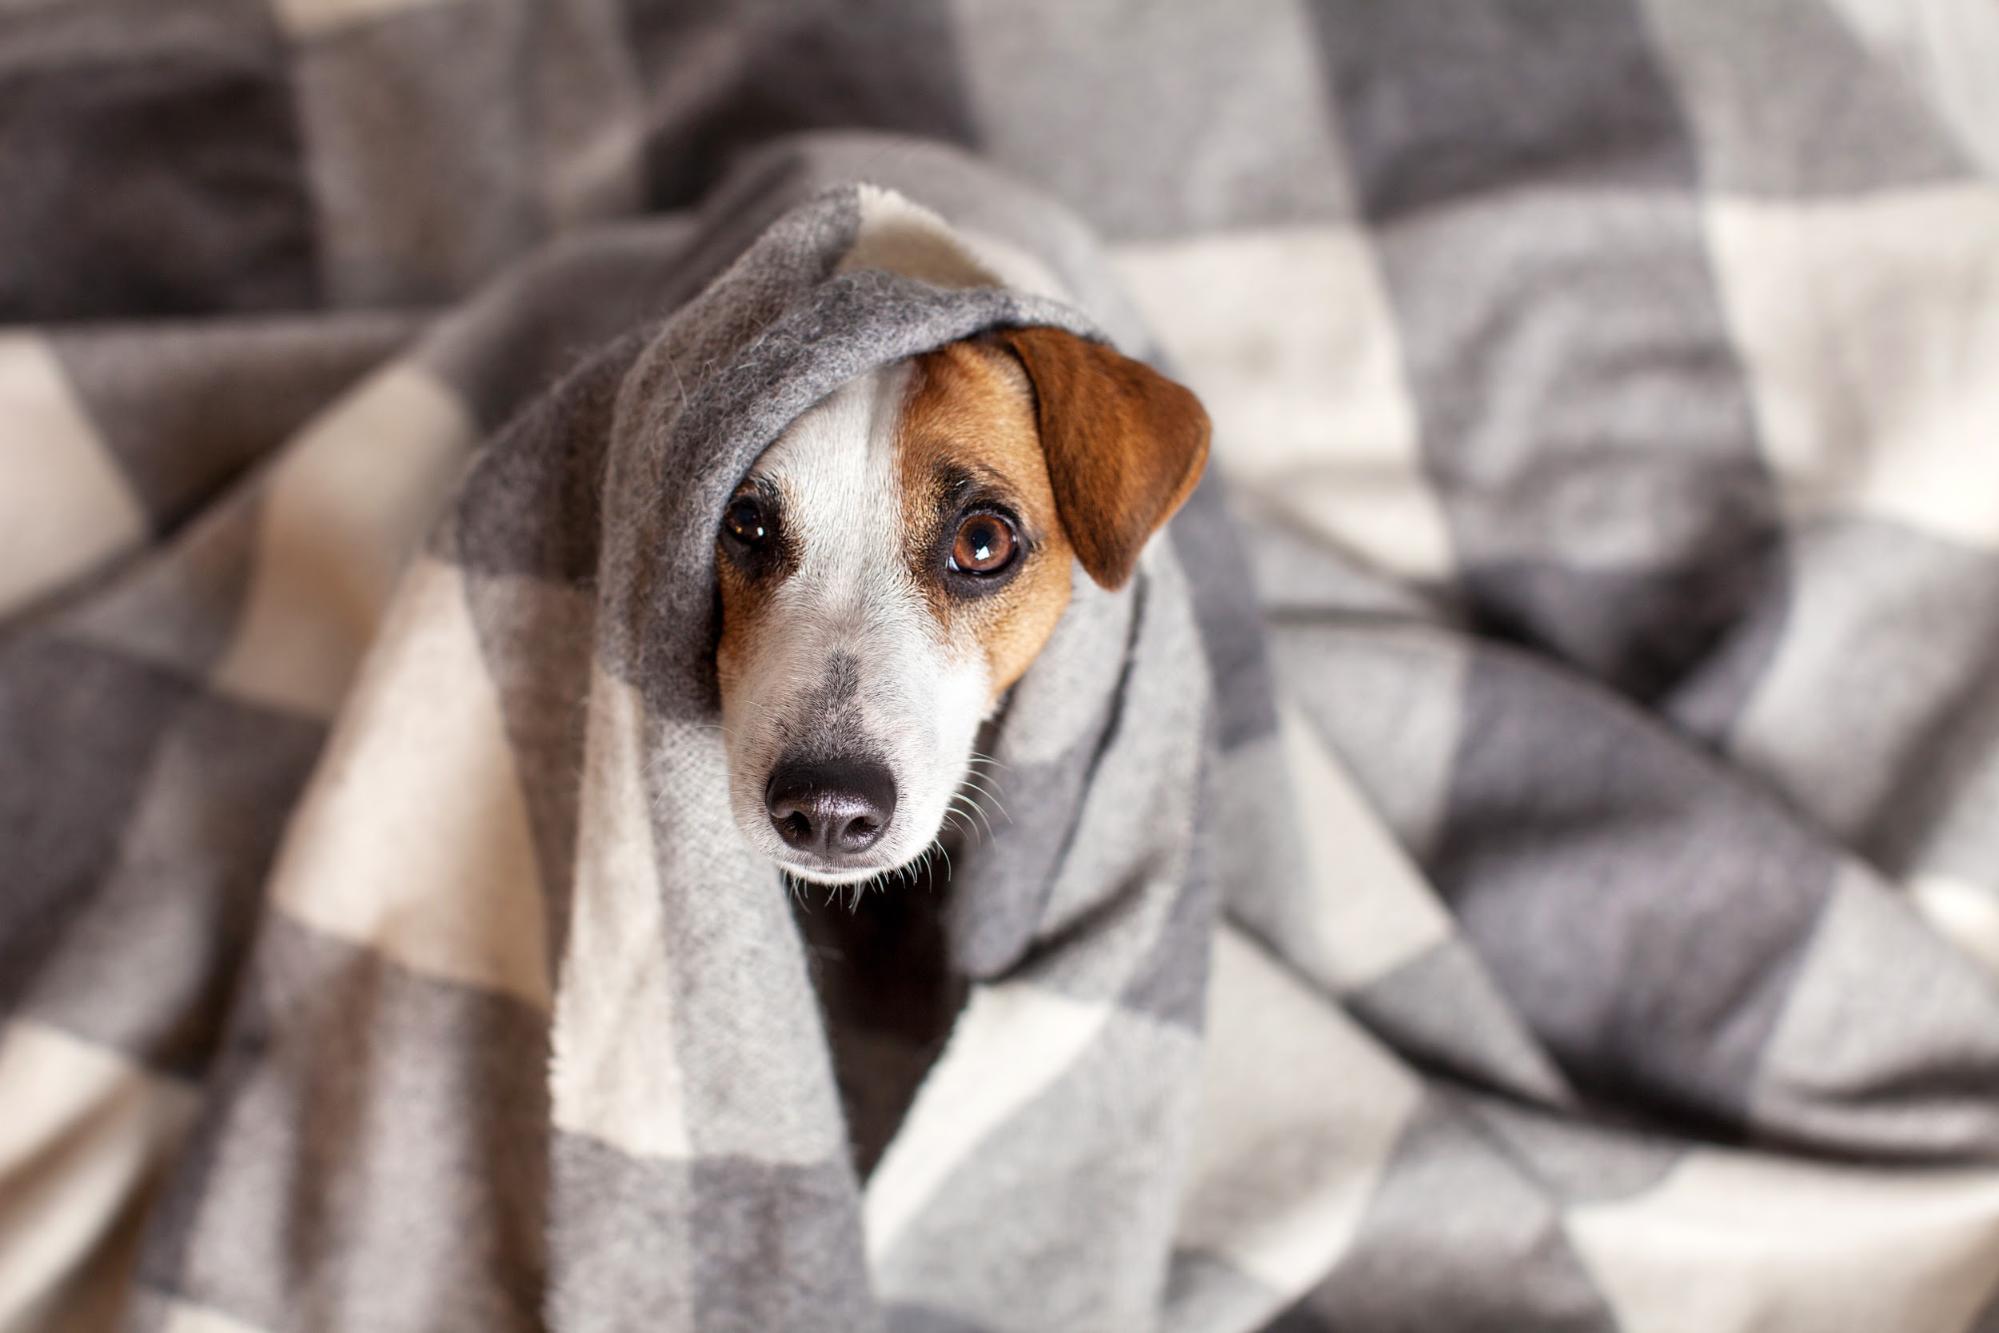 Dog anxiously hiding under blanket